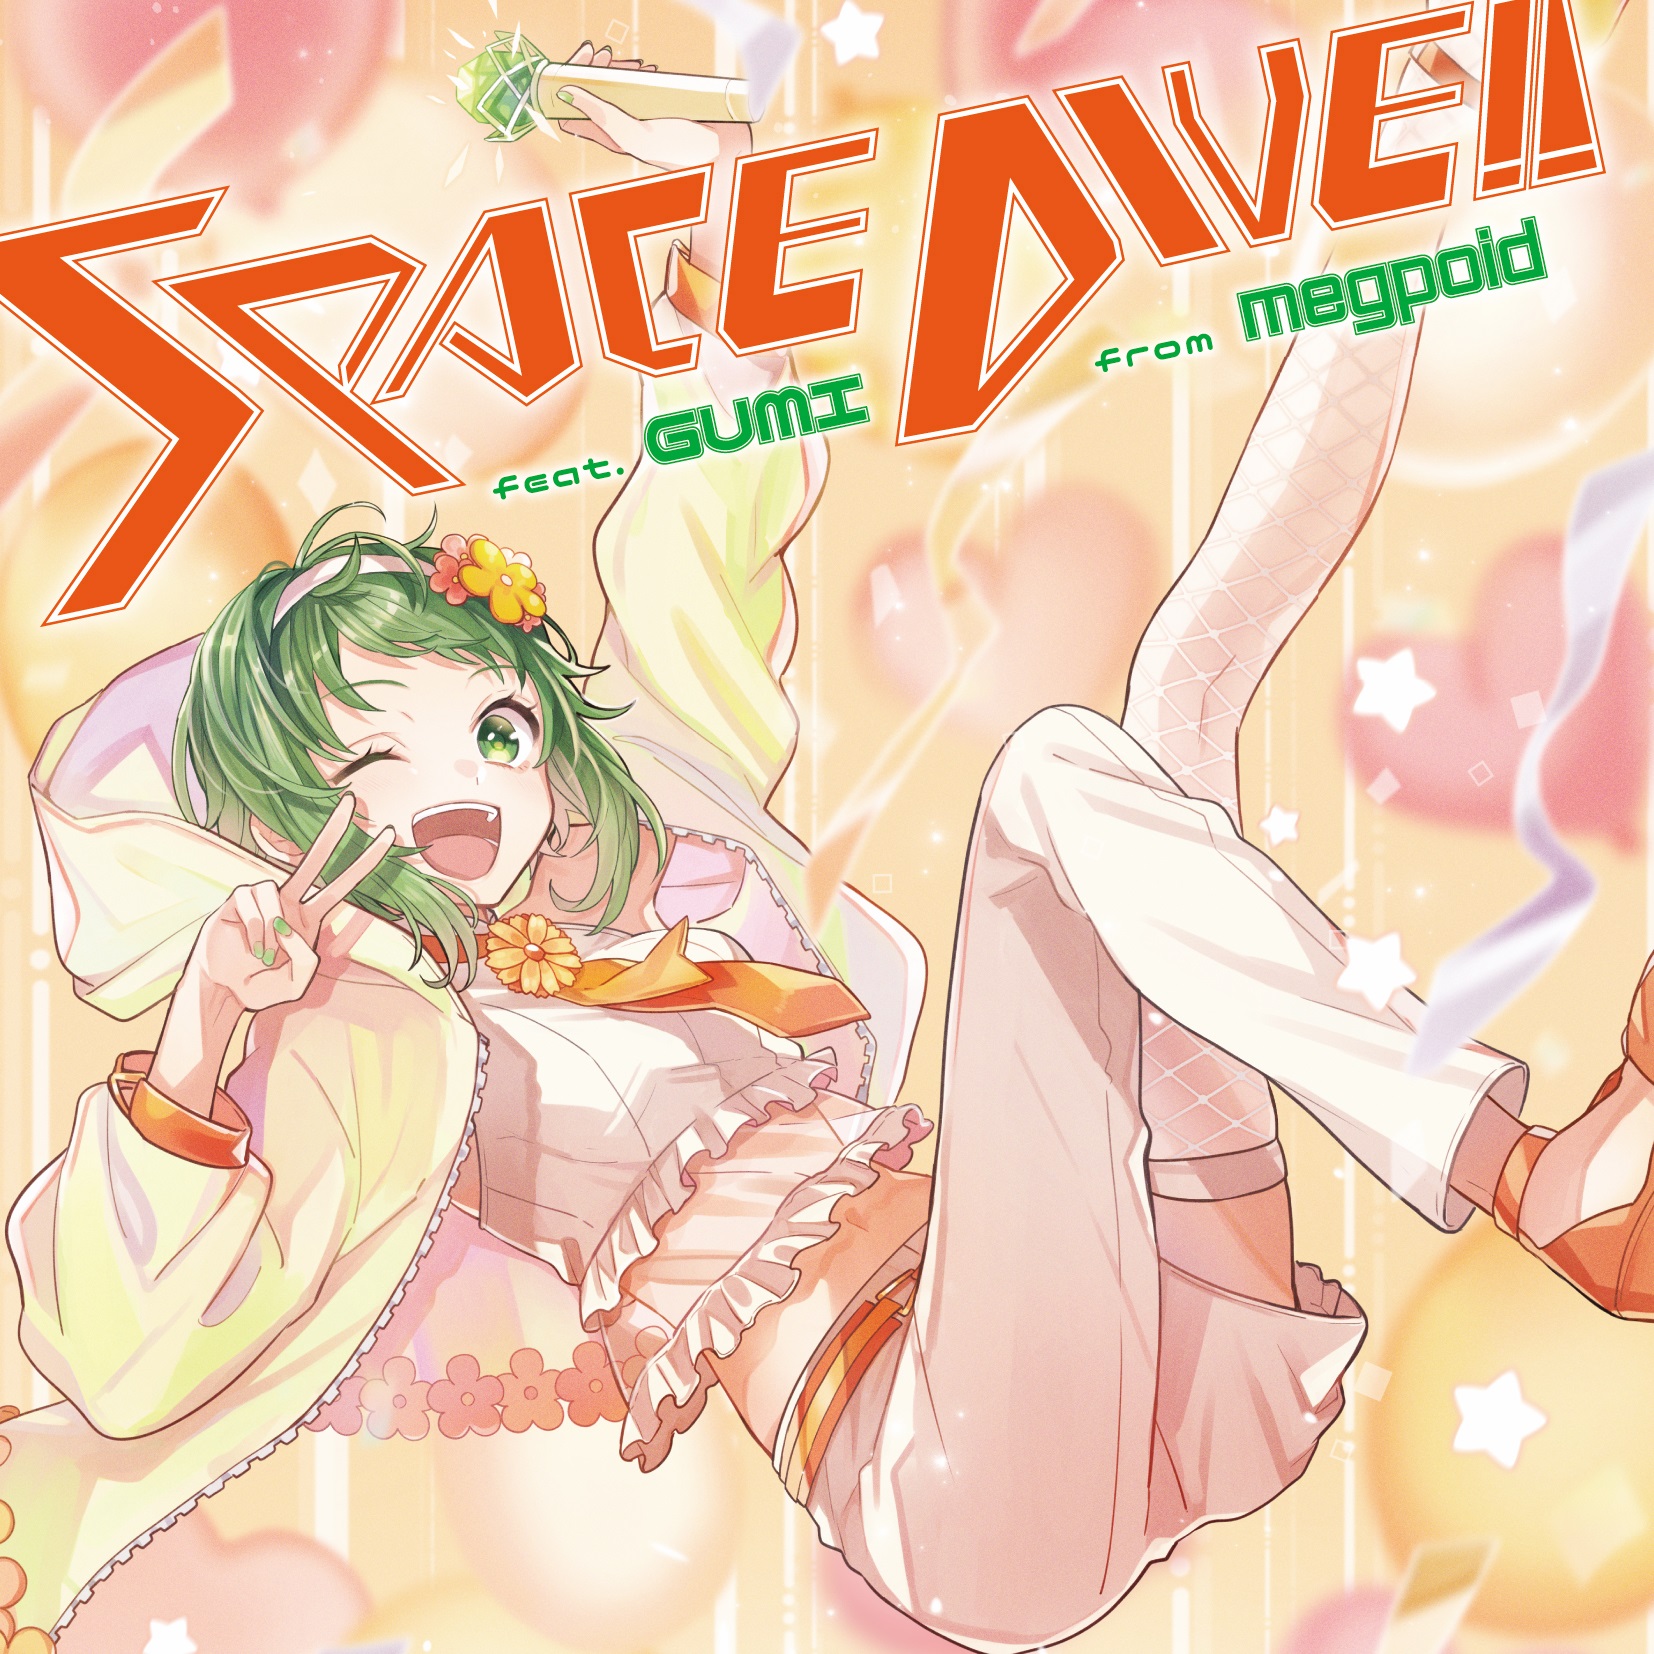 Space Dive プロジェクト第一弾 Vocaloid Gumi による豪華2枚組コンピレーションアルバムが発売決定 株式会社ポニーキャニオンのプレスリリース